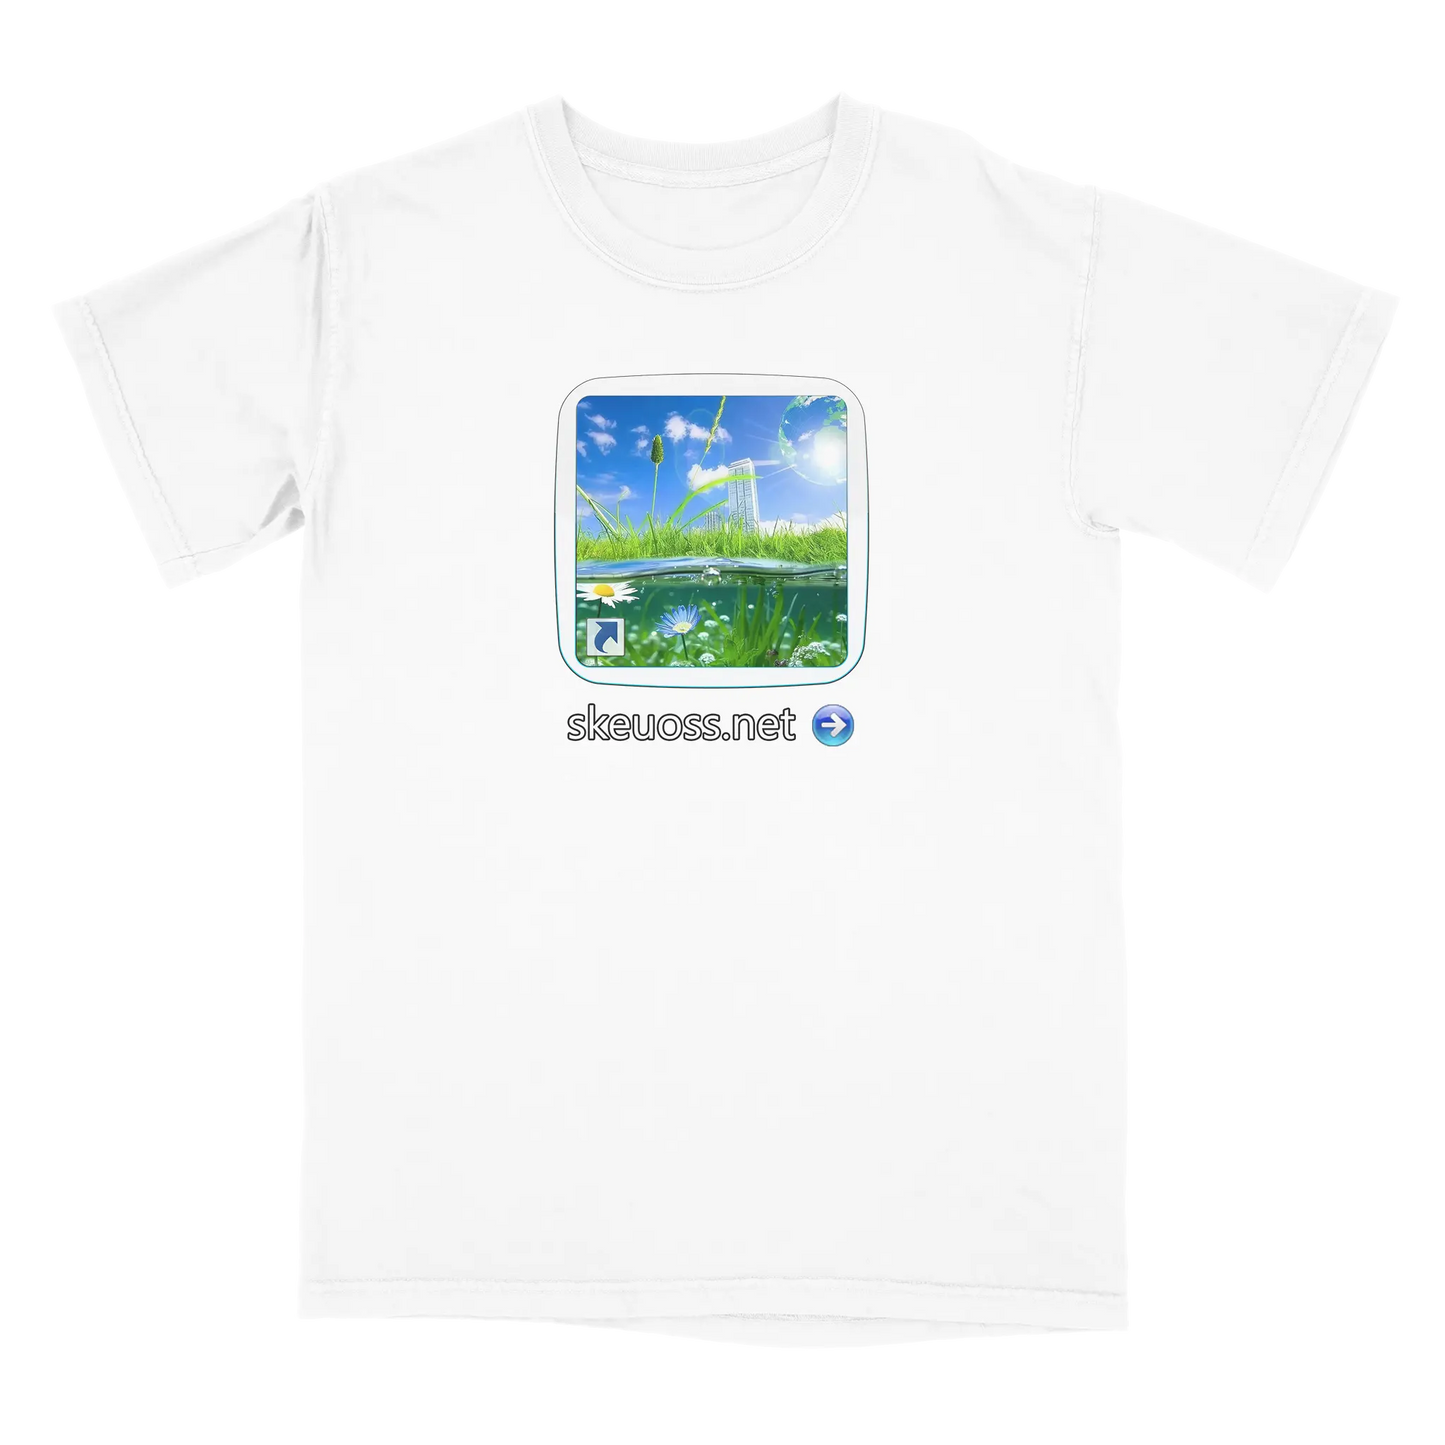 Frutiger Aero T-shirt - User Login Collection - User 162